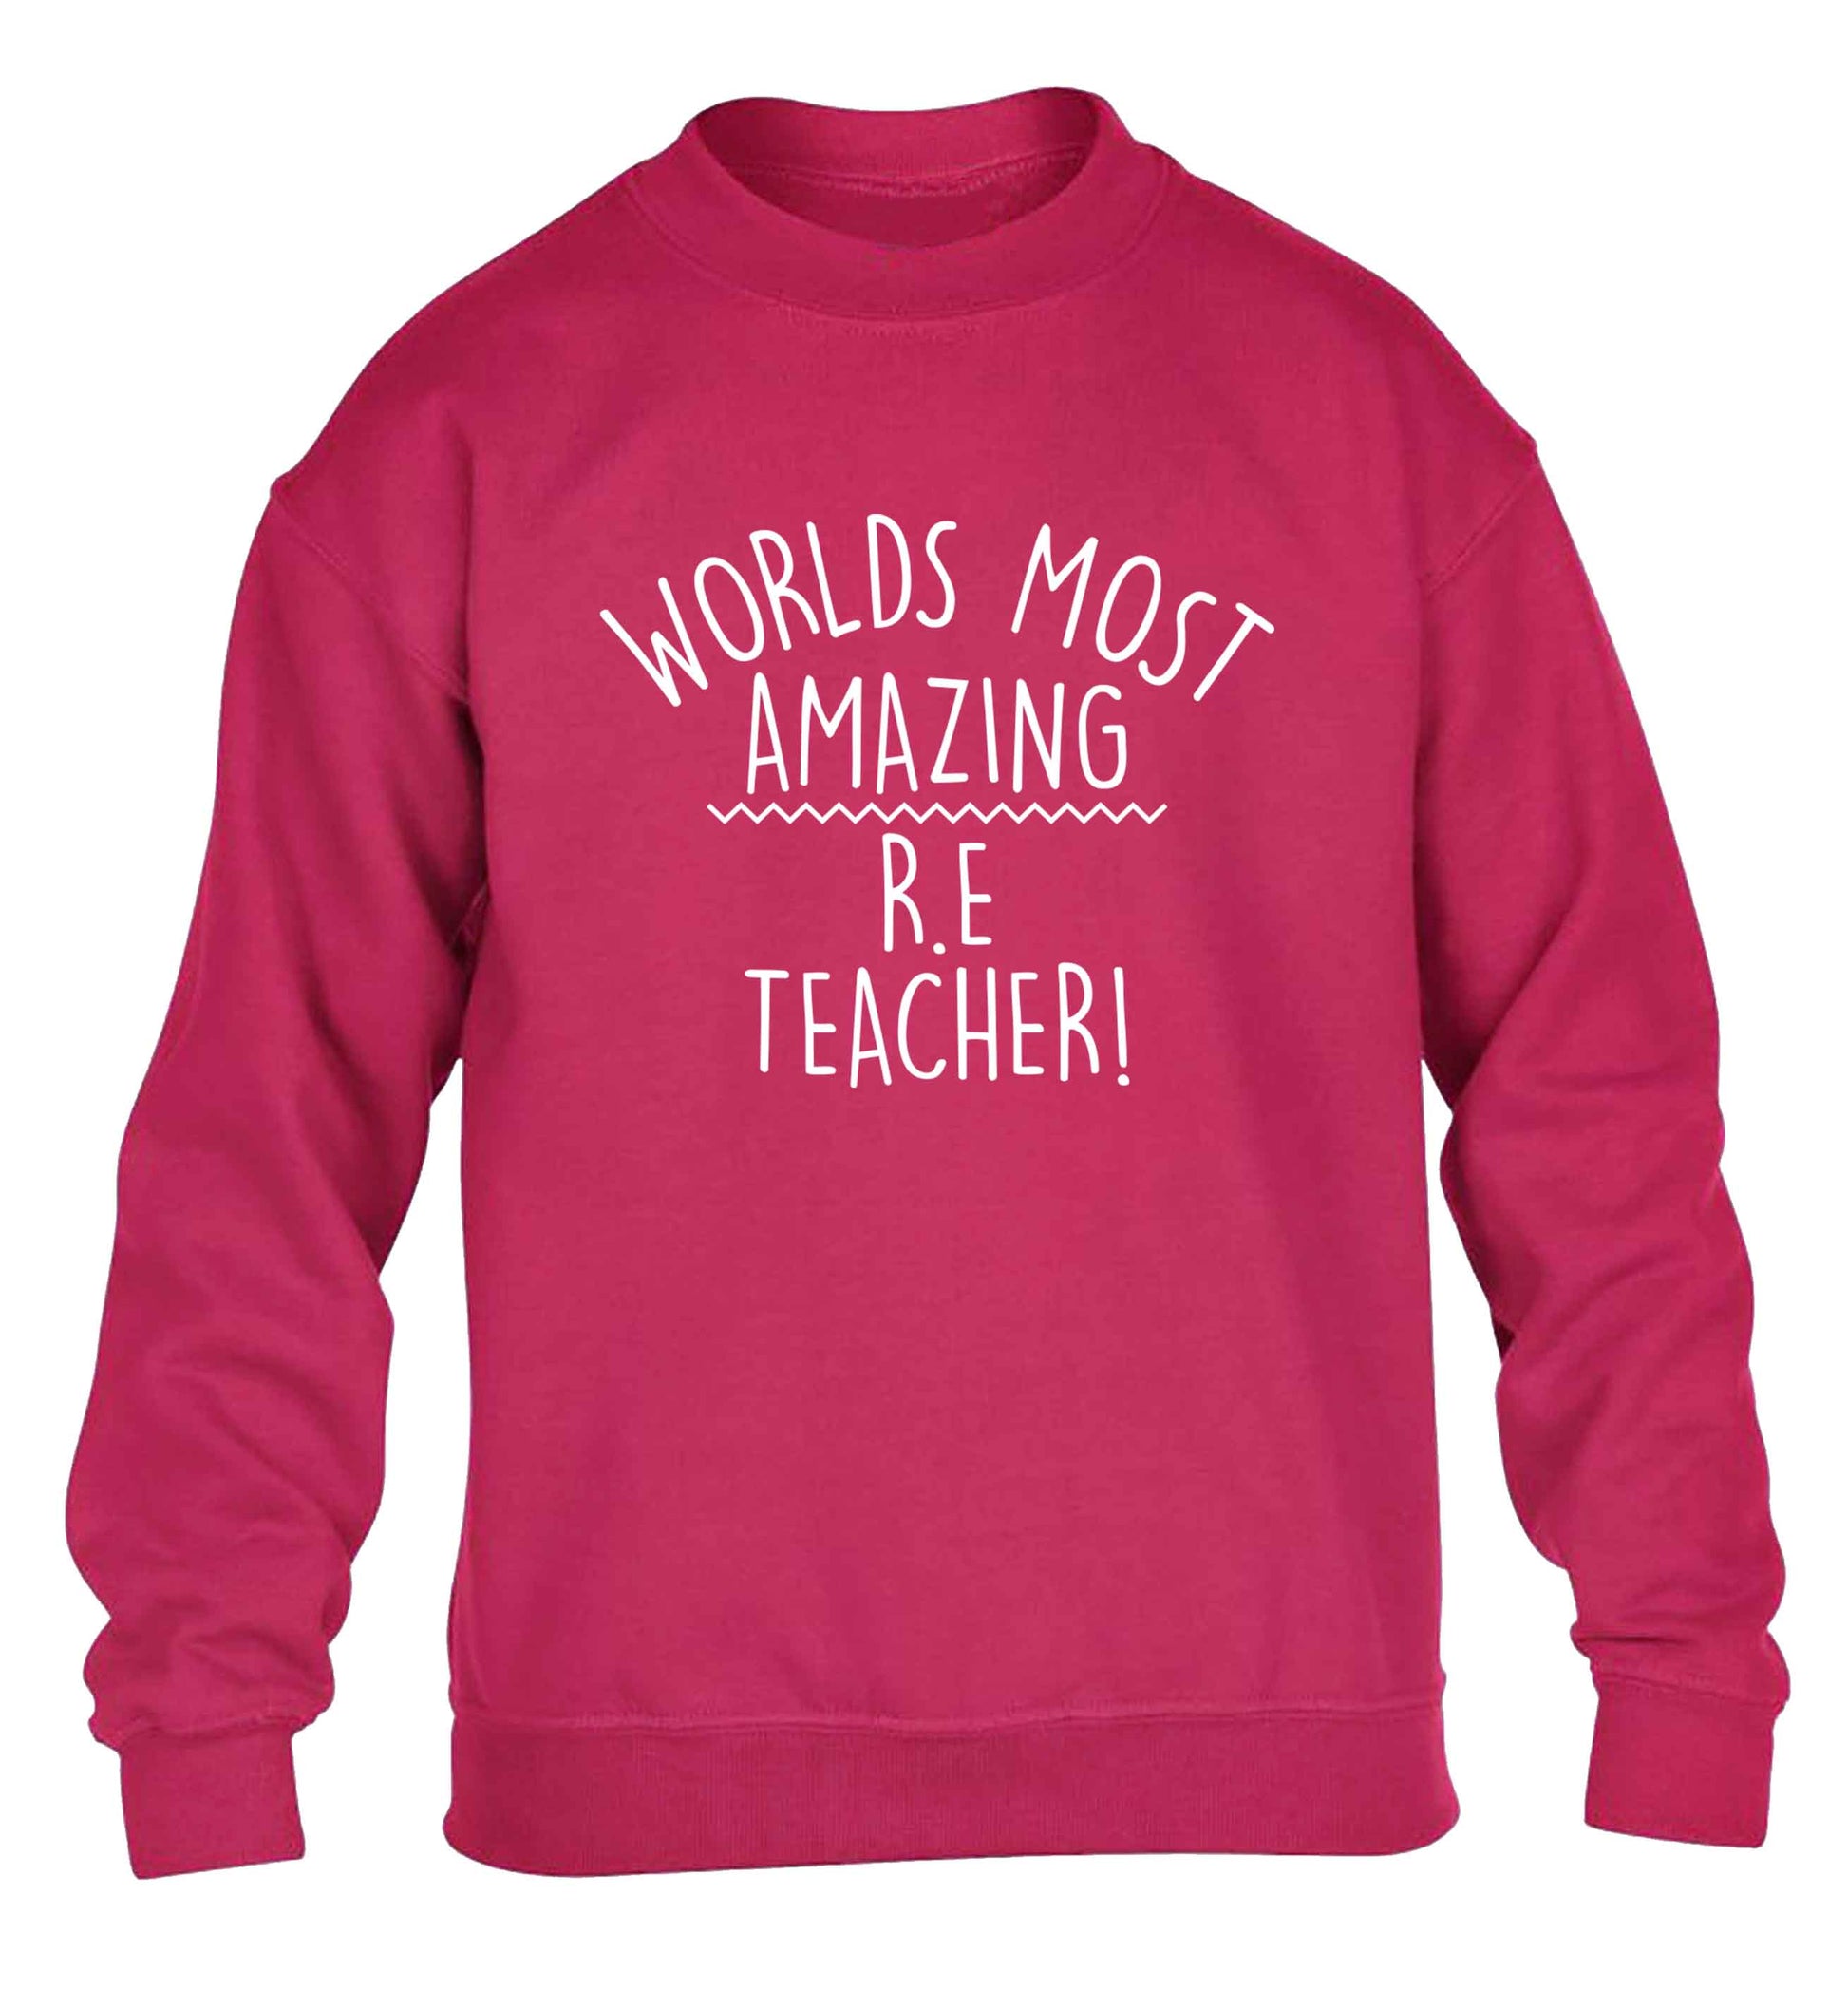 Worlds most amazing R.E teacher children's pink sweater 12-13 Years